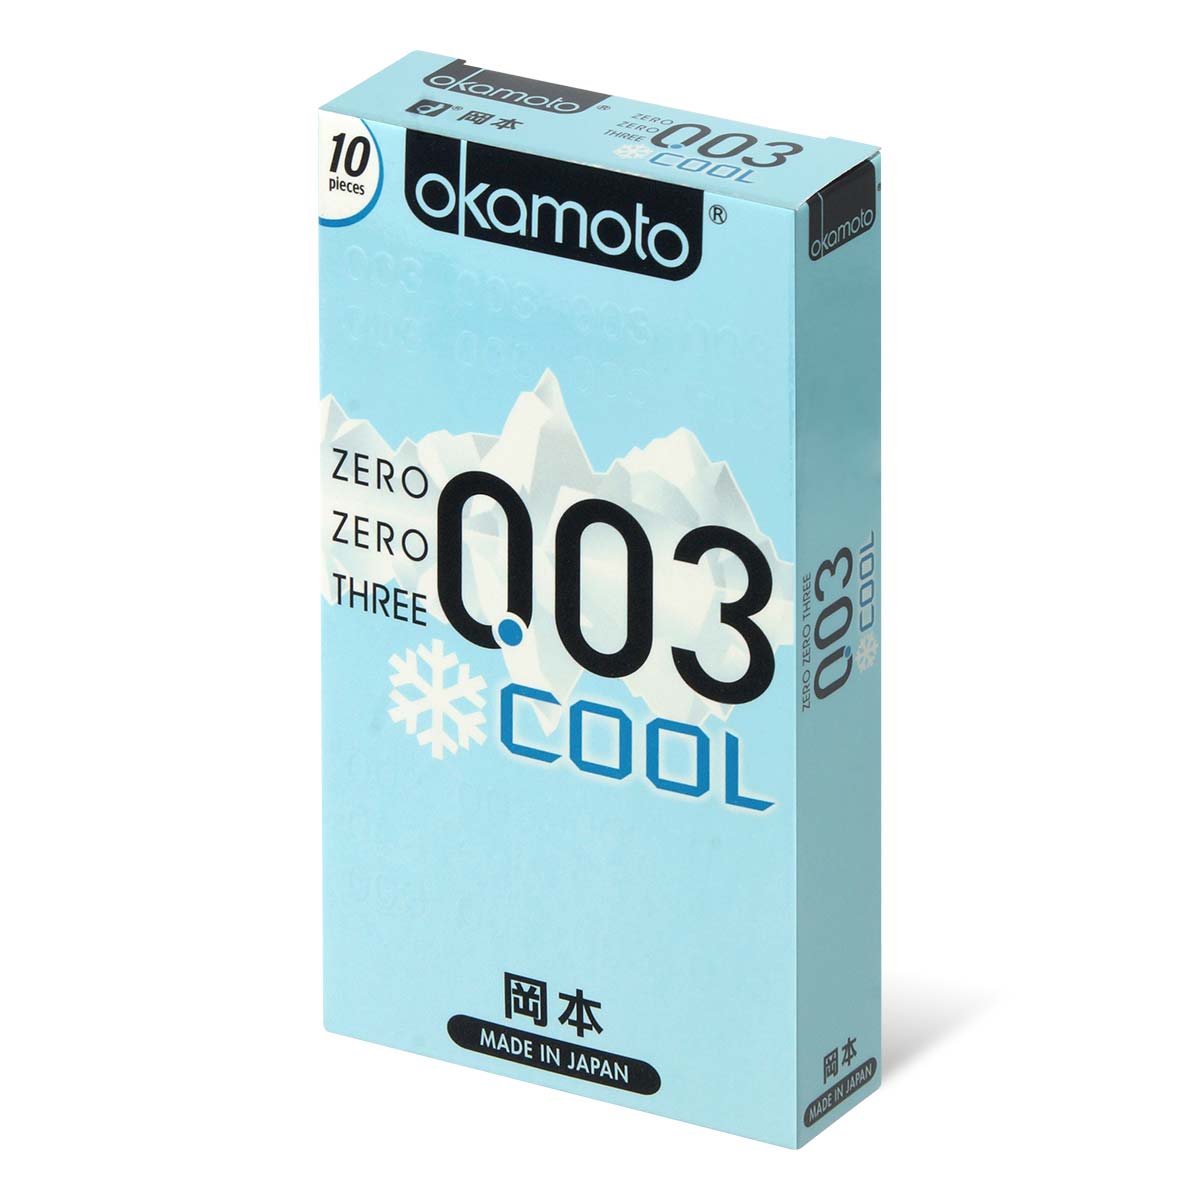 Okamoto 0.03 Cool 10's Pack Latex Condom-thumb_1